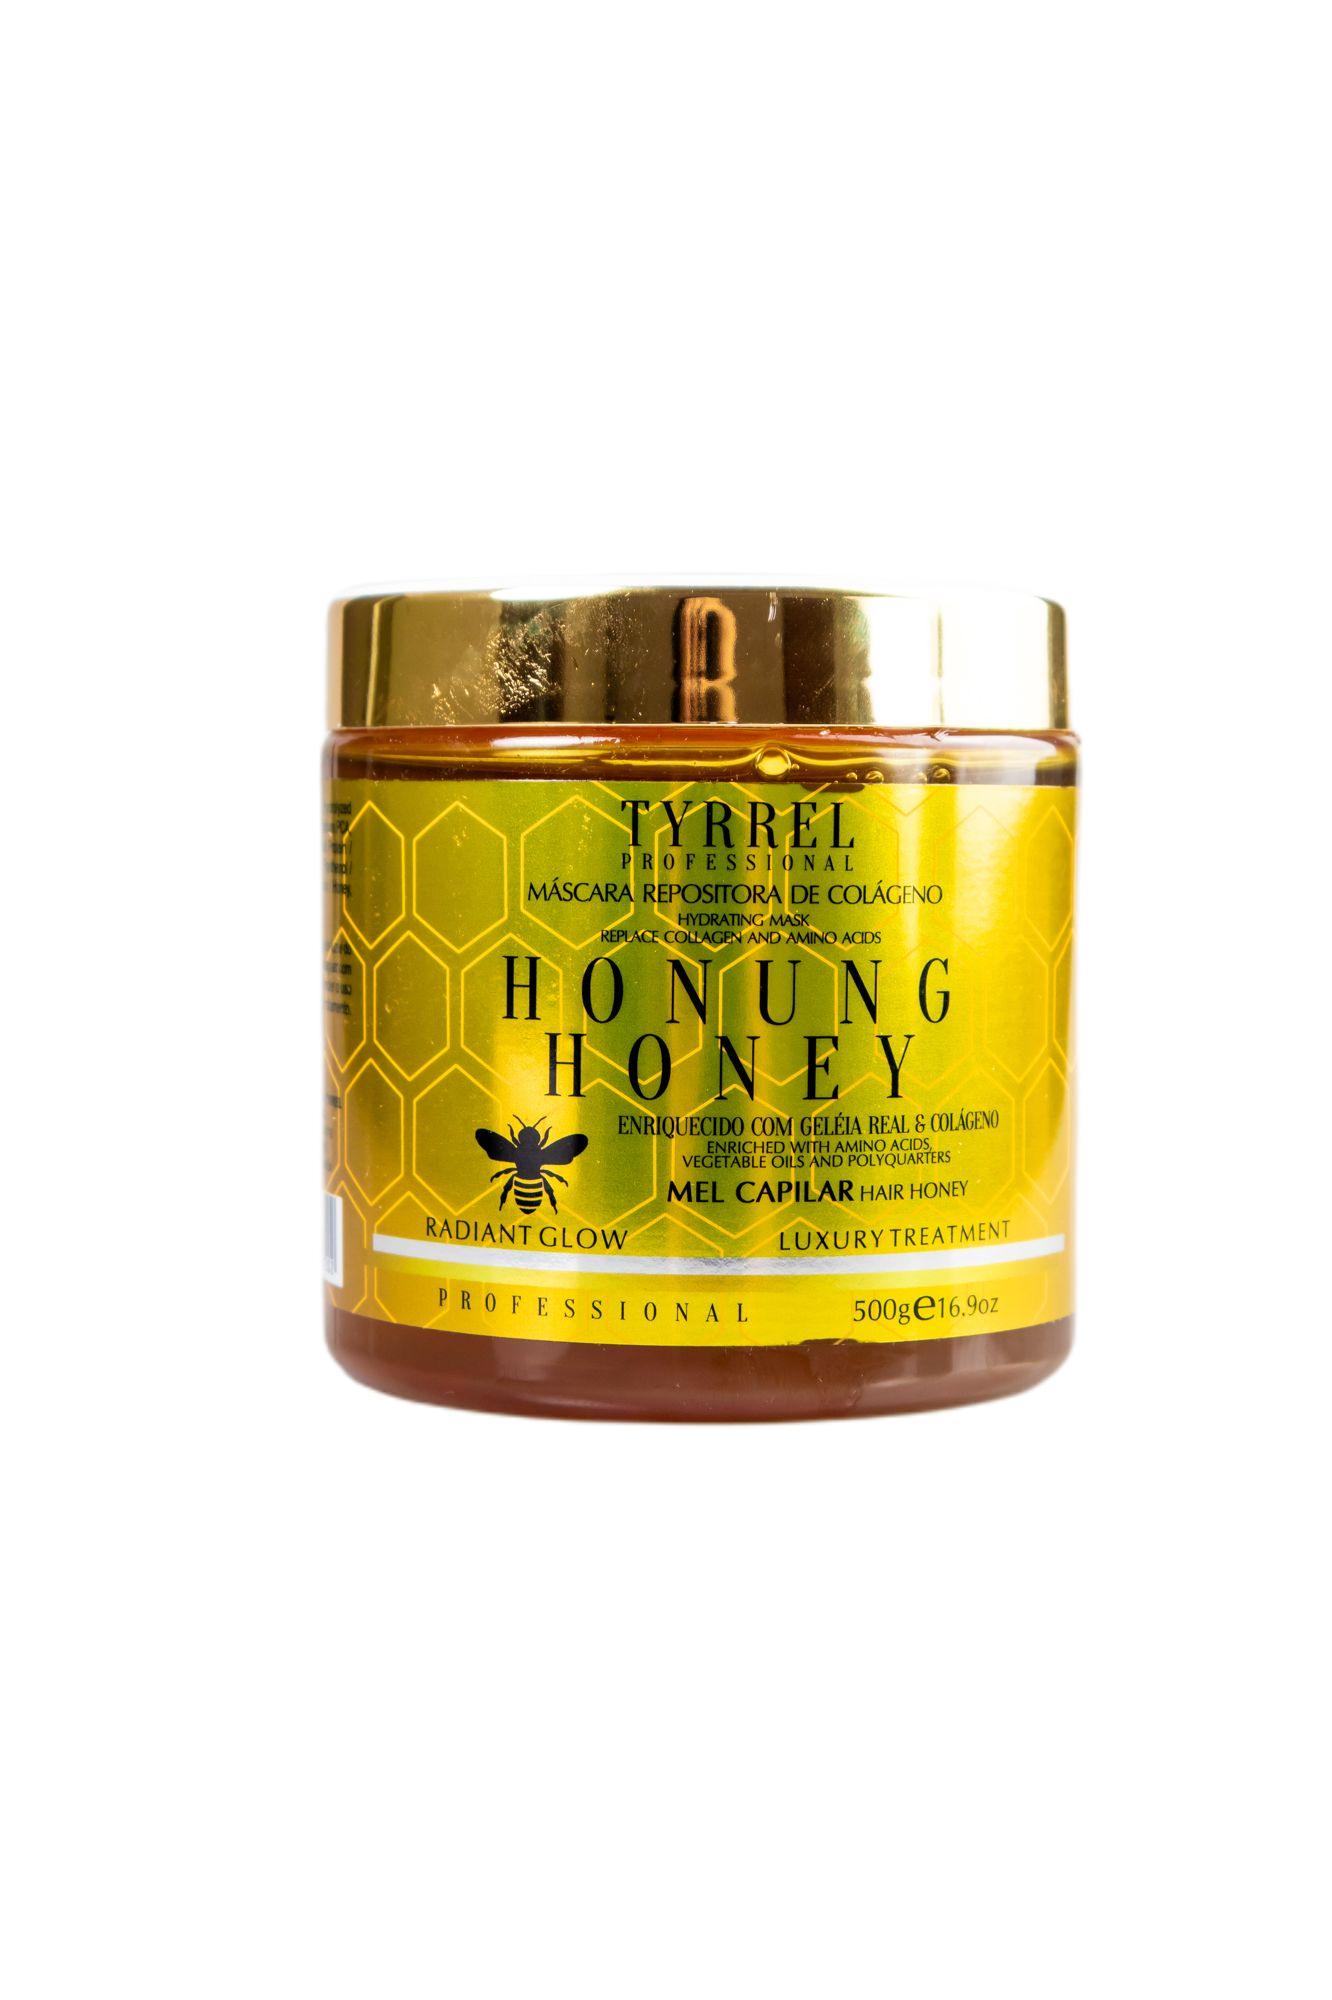 Tyrrel Hair Mask Luxury Treatment Honung Honey Royal Jelly Collagen Repository Mask 500g - Tyrrel